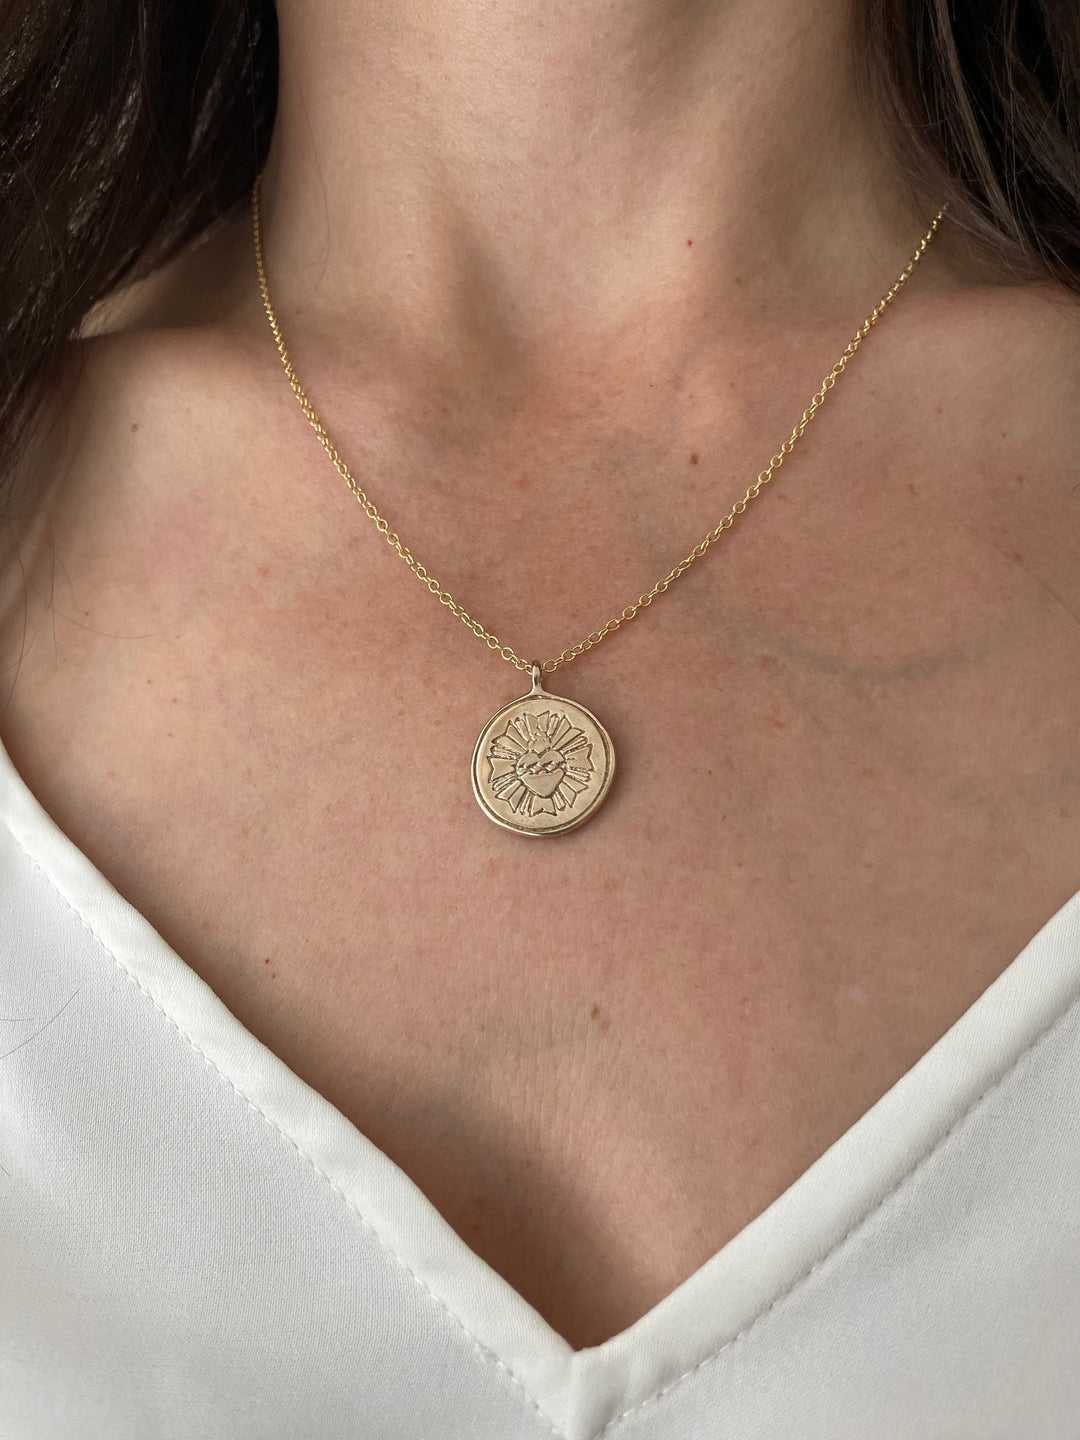 Woman Wearing Bronze Handmade Sacred Heart Pendant Necklace